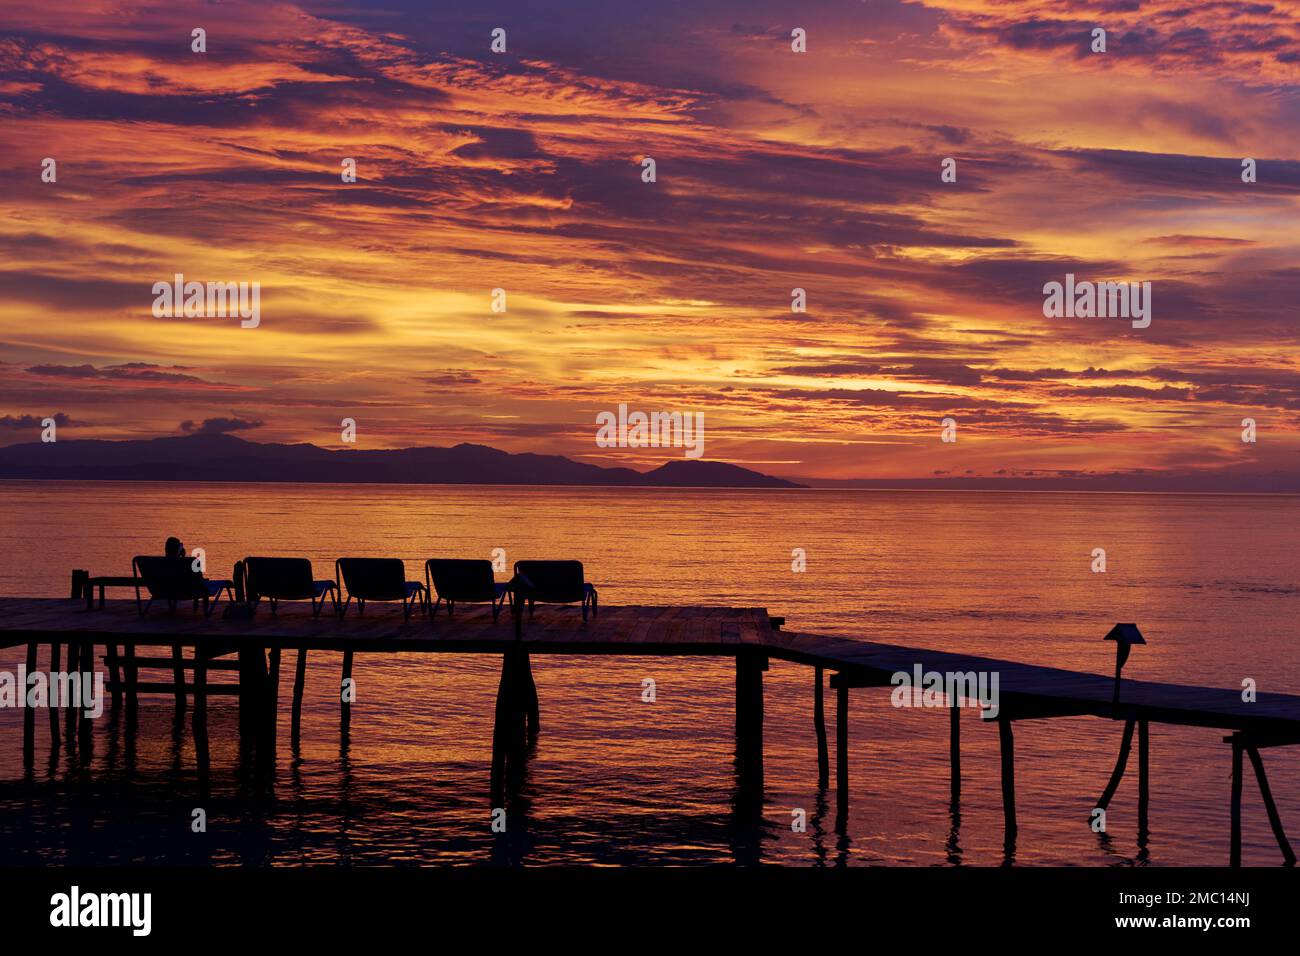 The boardwalk at Wai Resort, Raja Ampat Islands, Indonesia Stock Photo